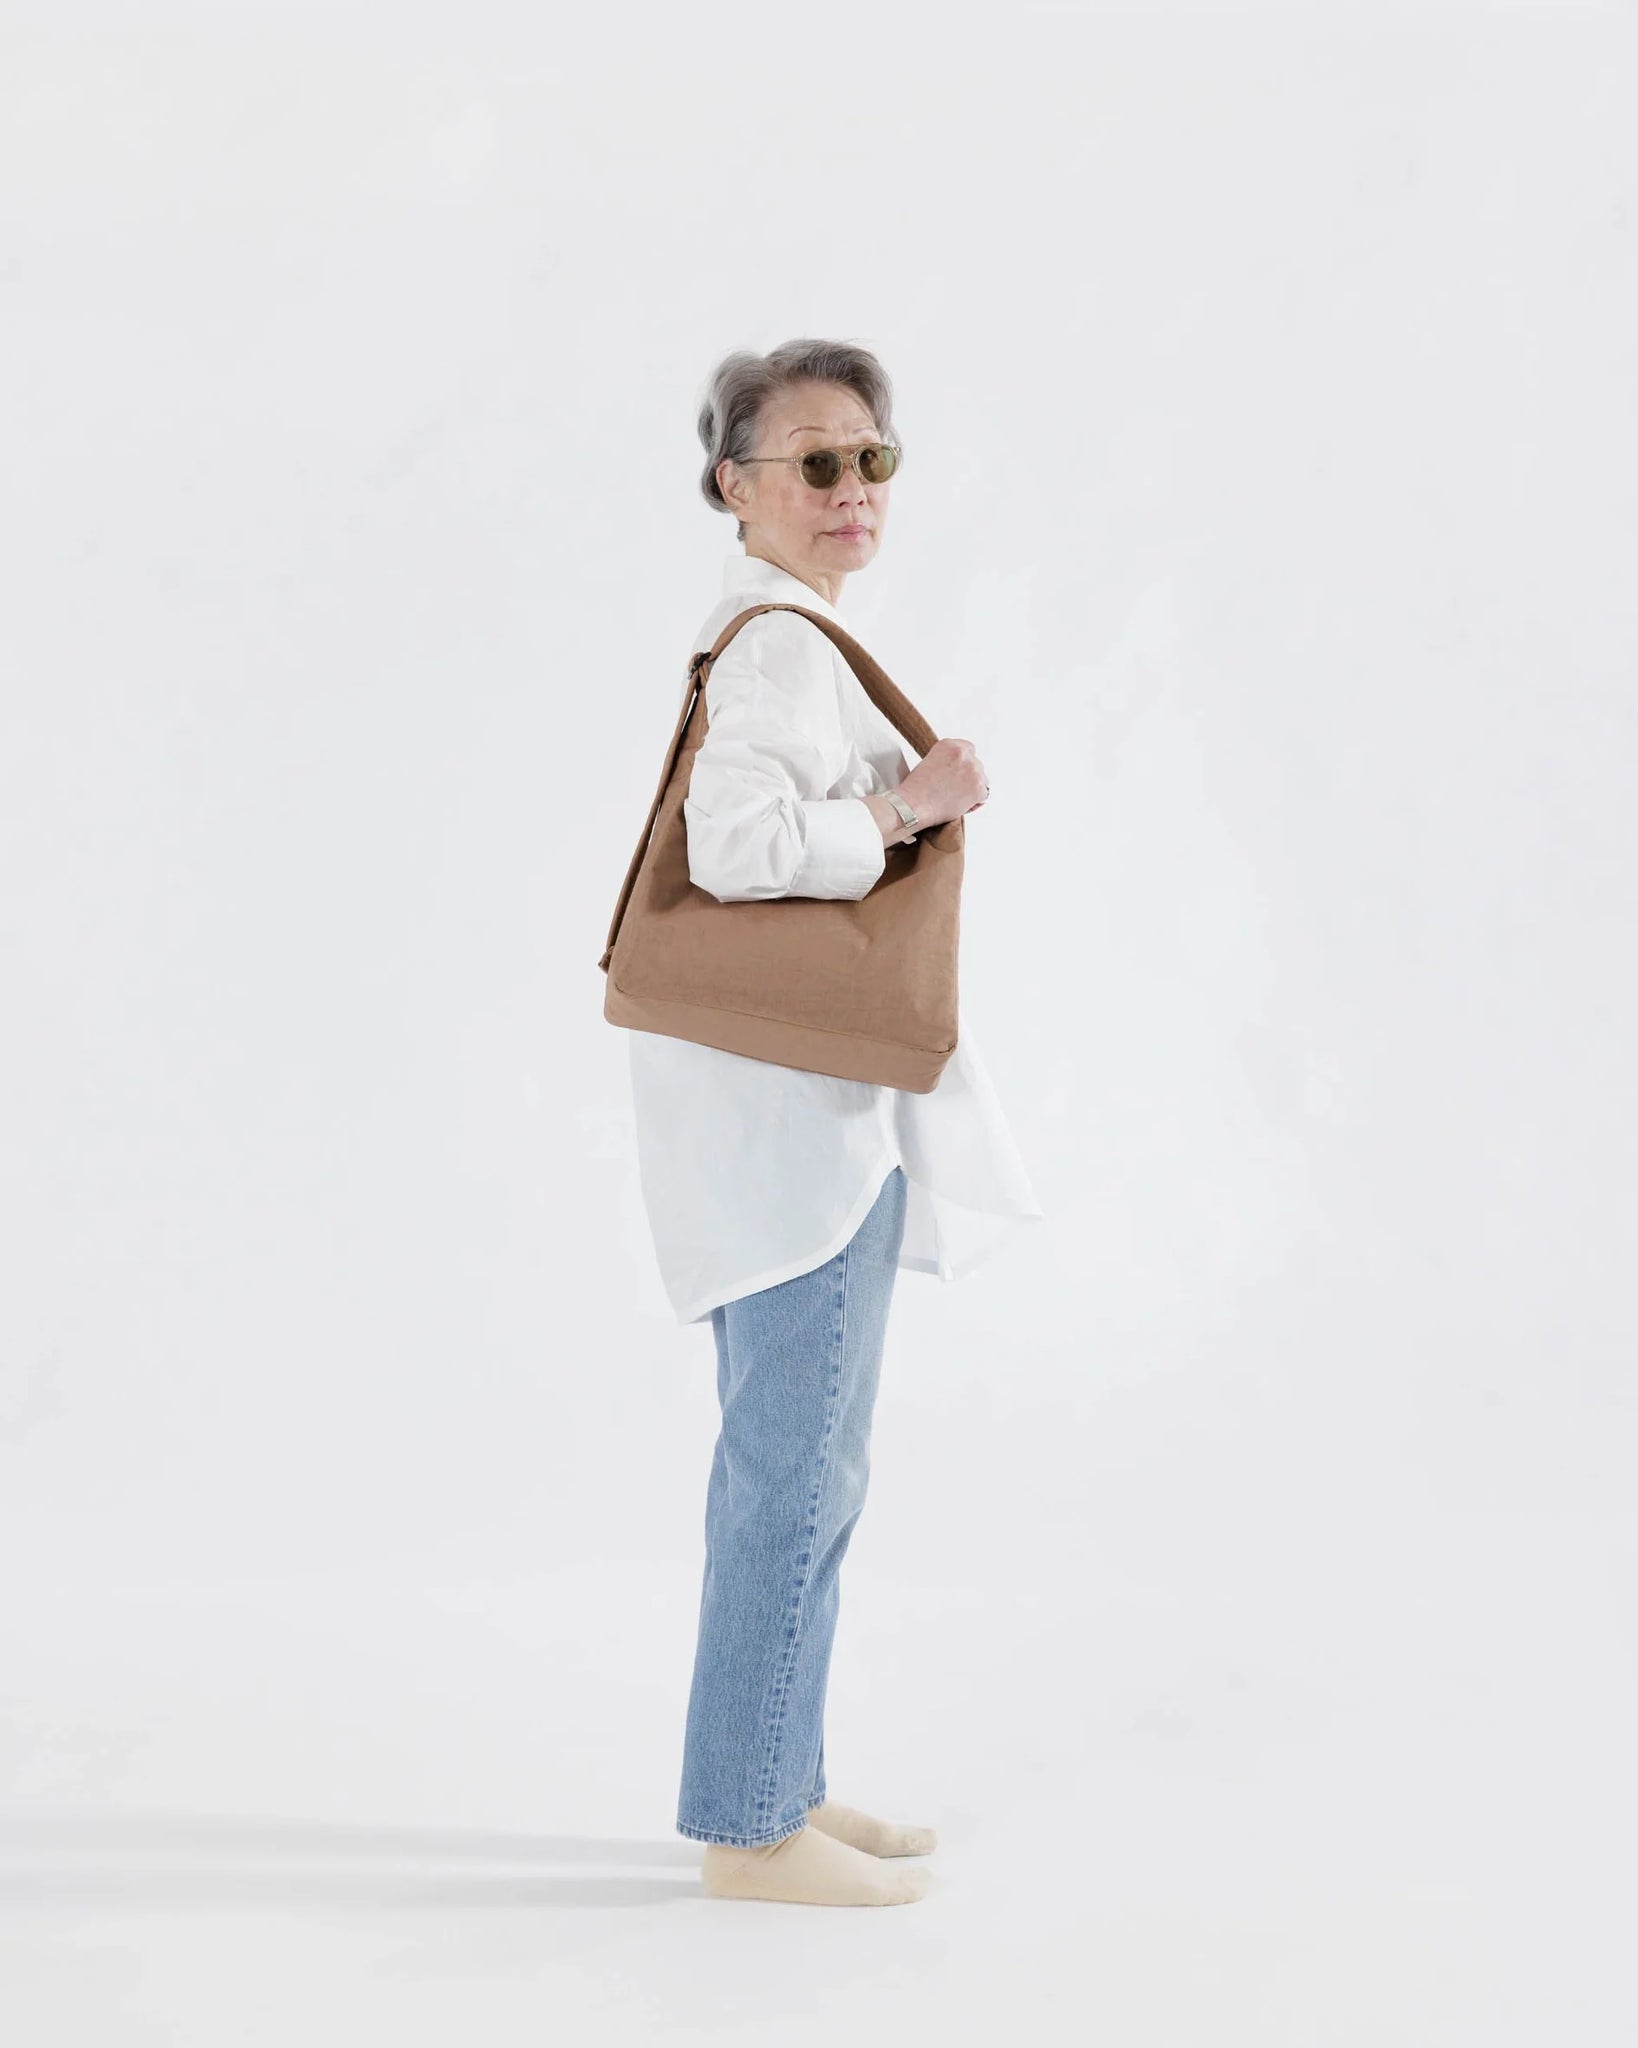 Nylon Shoulder Bag | Baggu